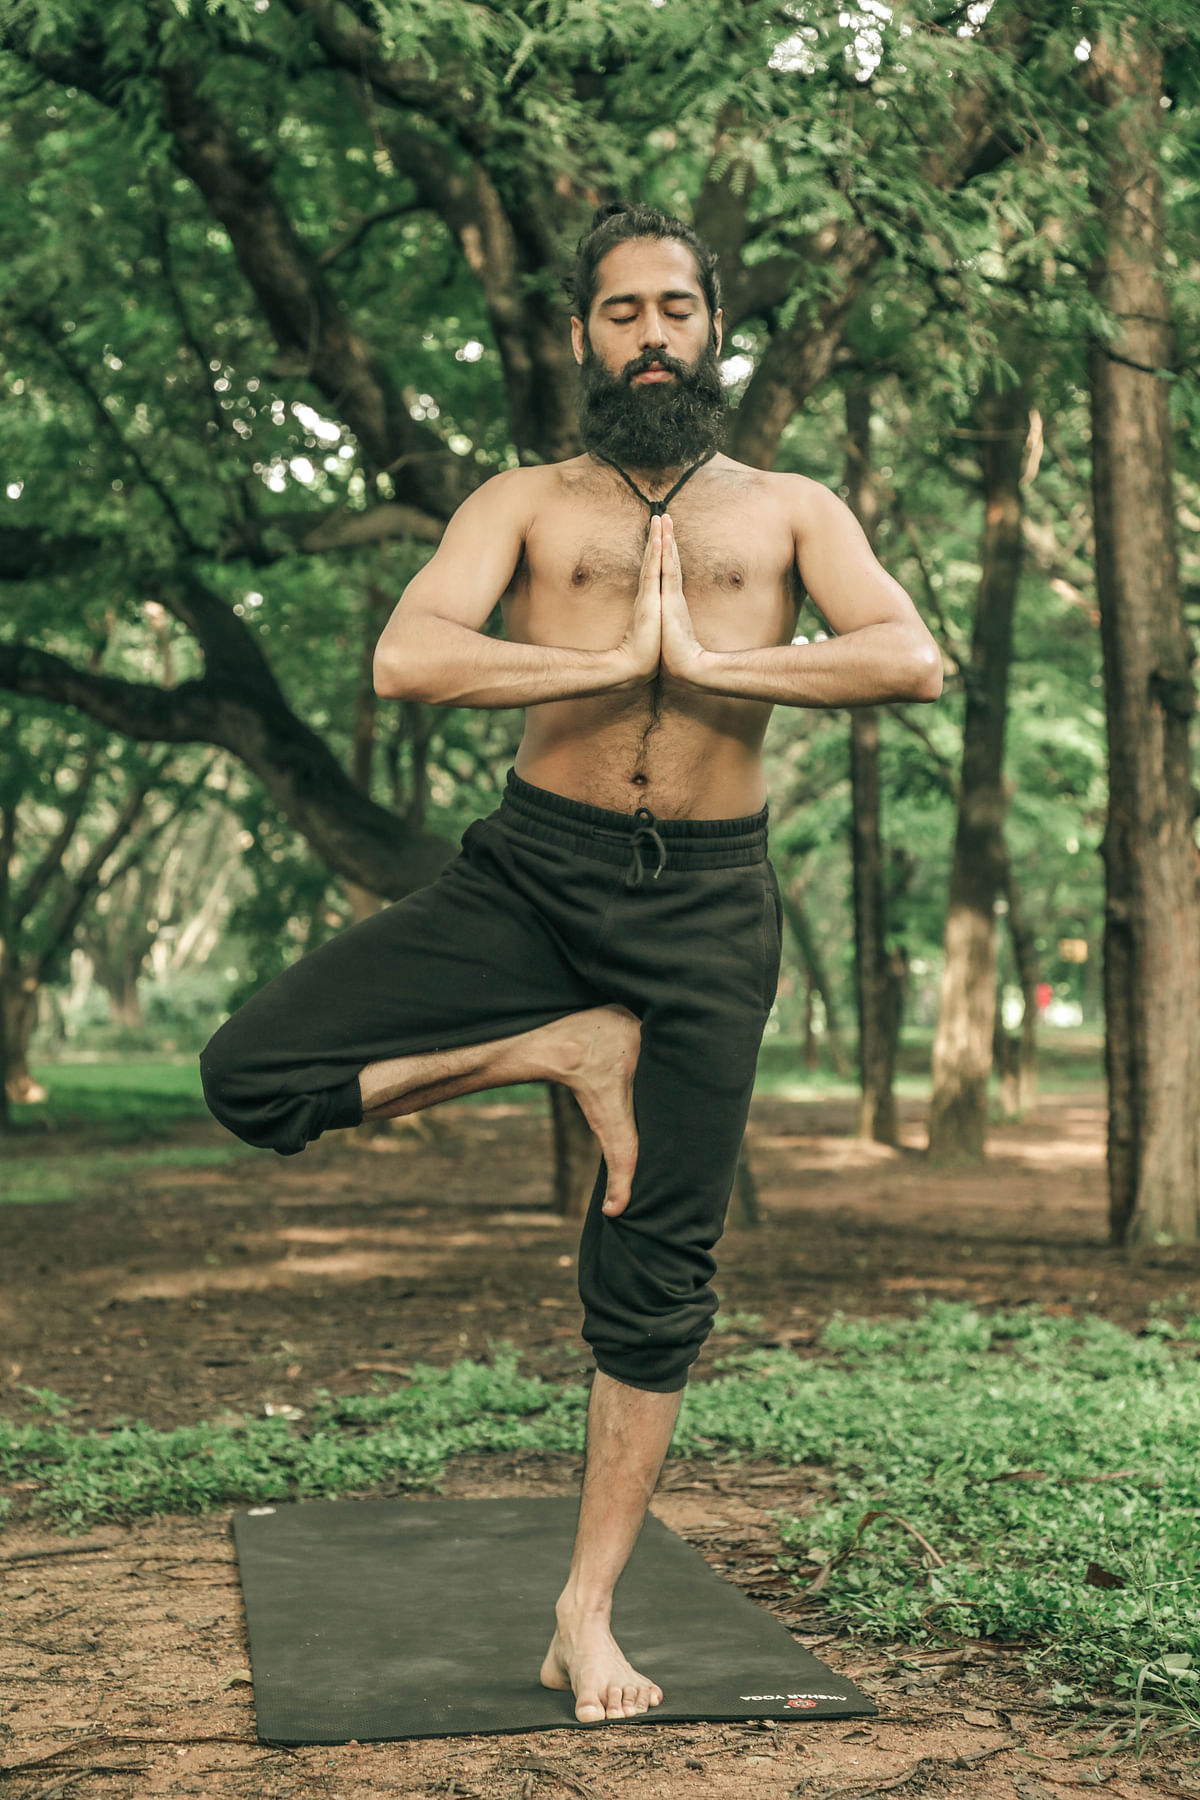 International Yoga Day: 10 Yoga Asanas for Beginners